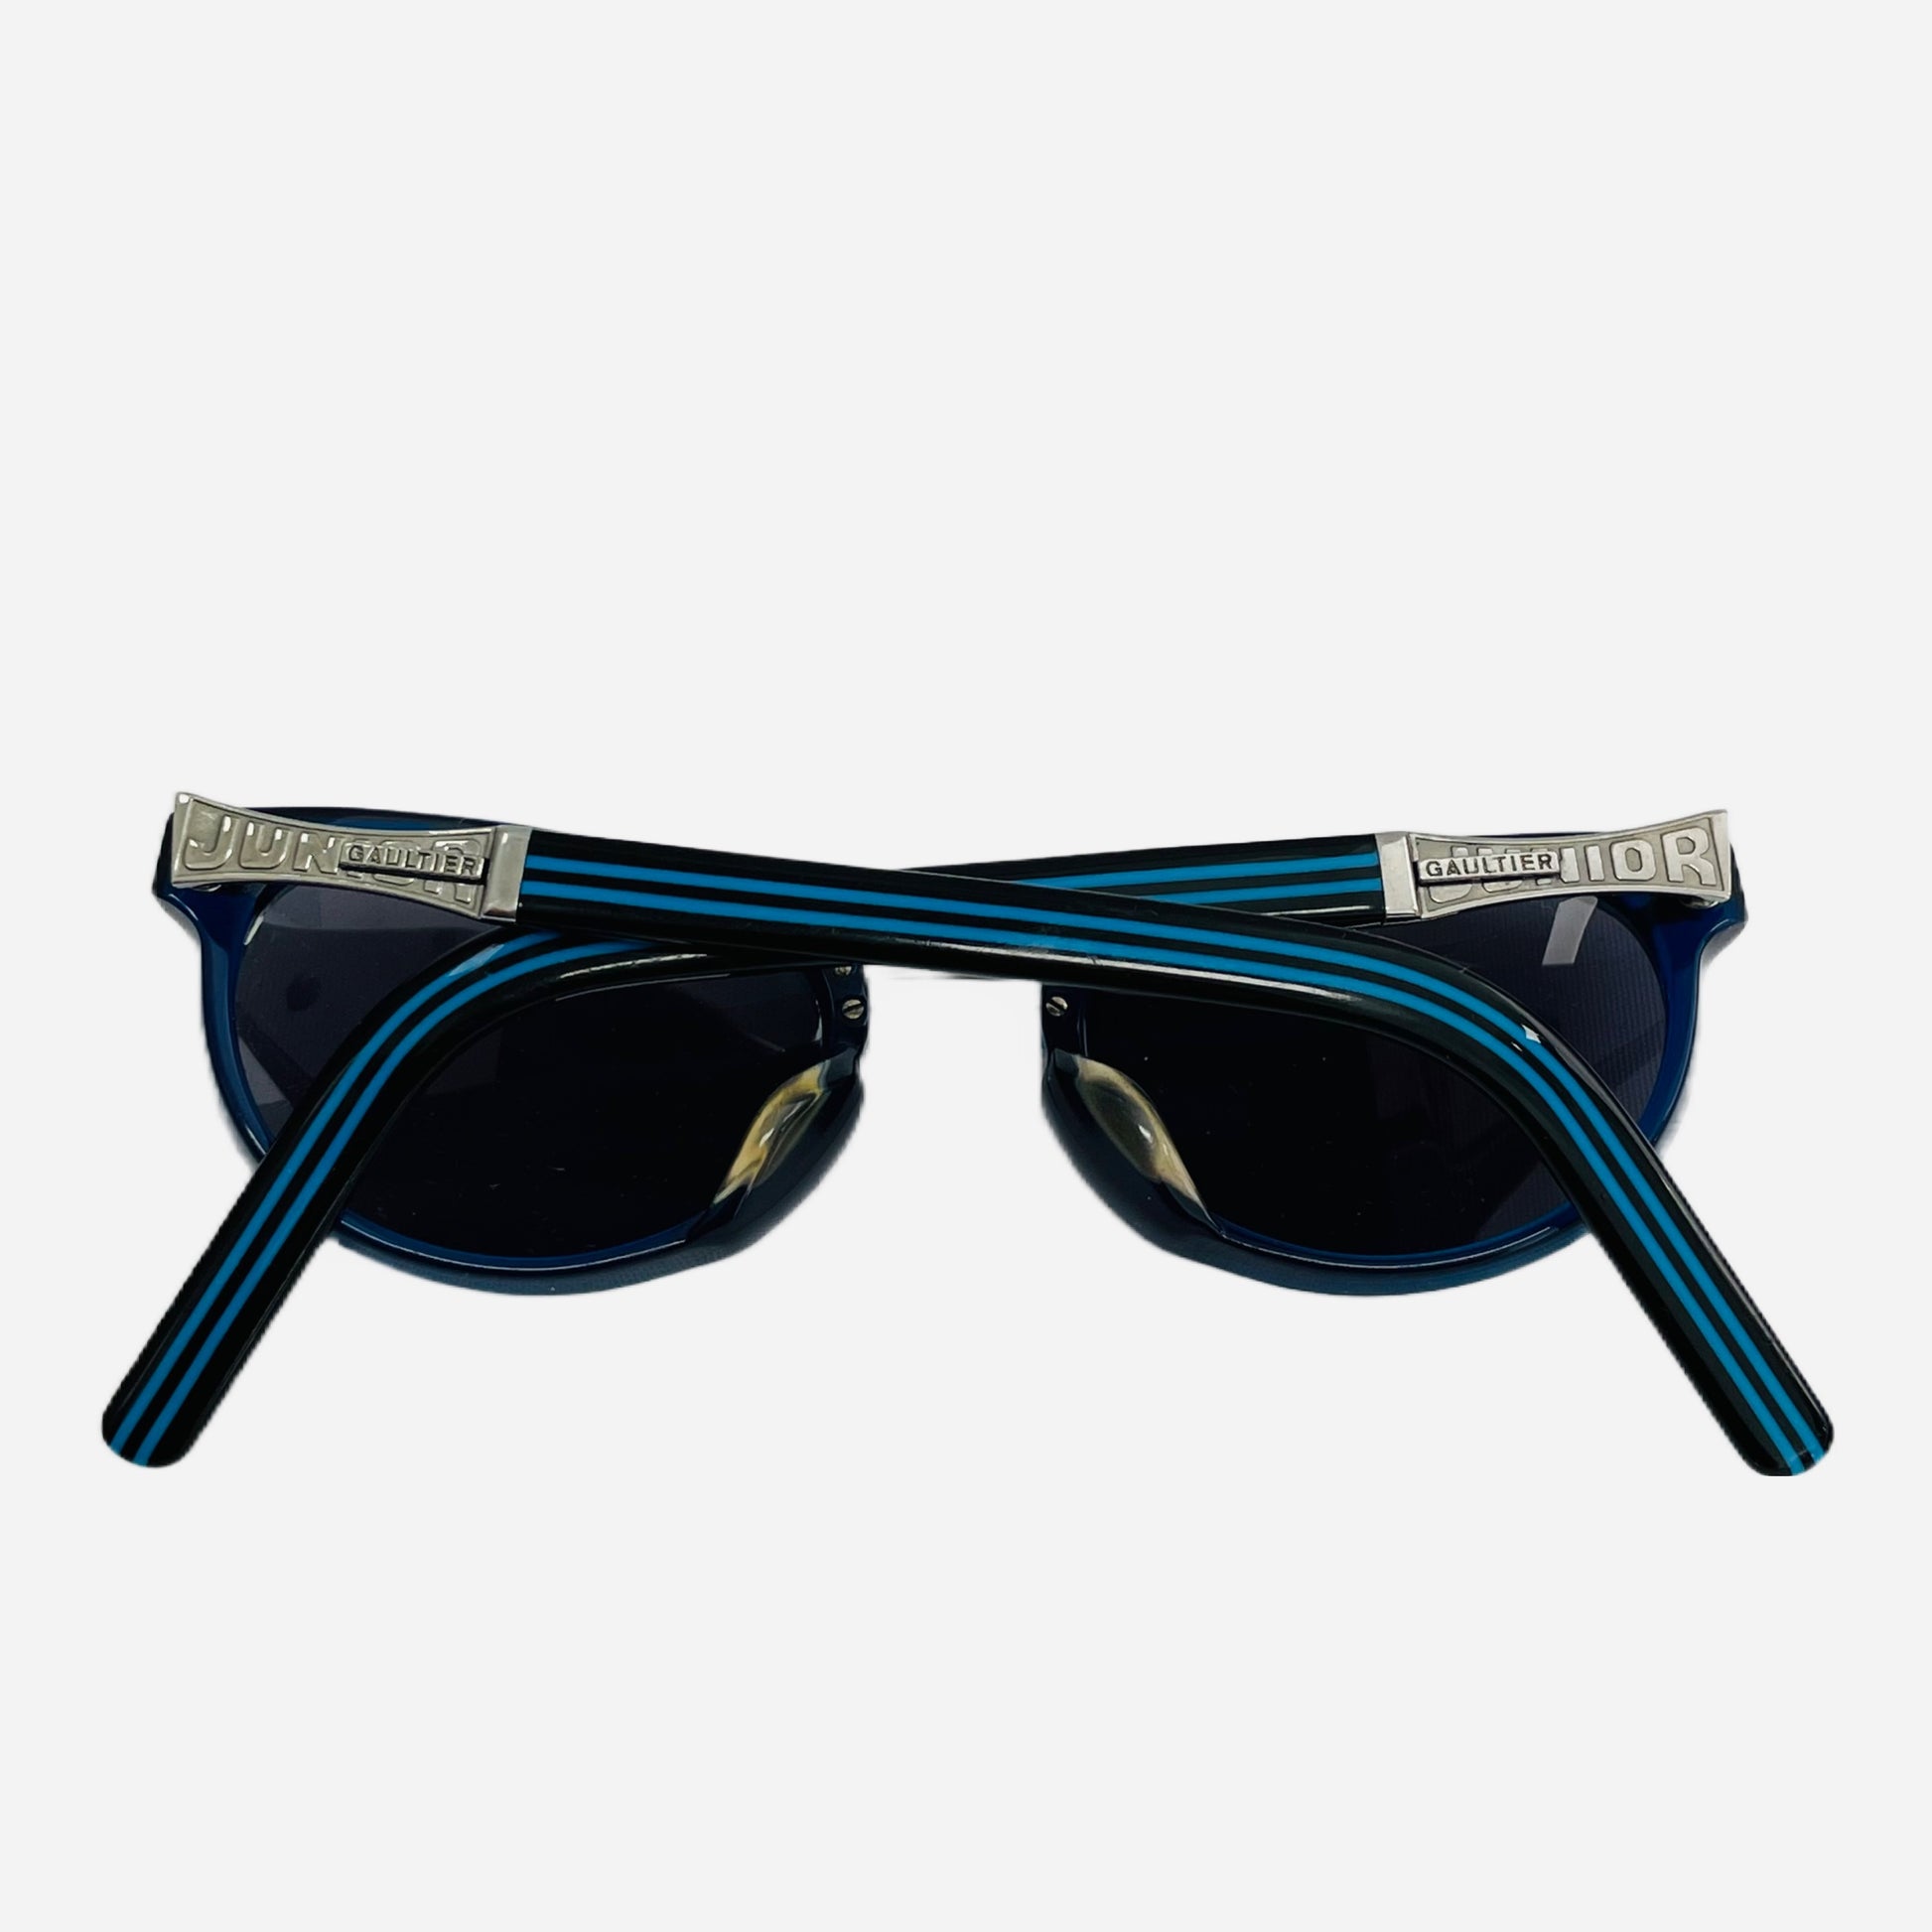 Jean-Paul-Gaultier-Junior-Gaultier-Sonnenbrille-Sunglasses-Modell-58-1272-the-seekers-vintage-designer-sunglasses-back